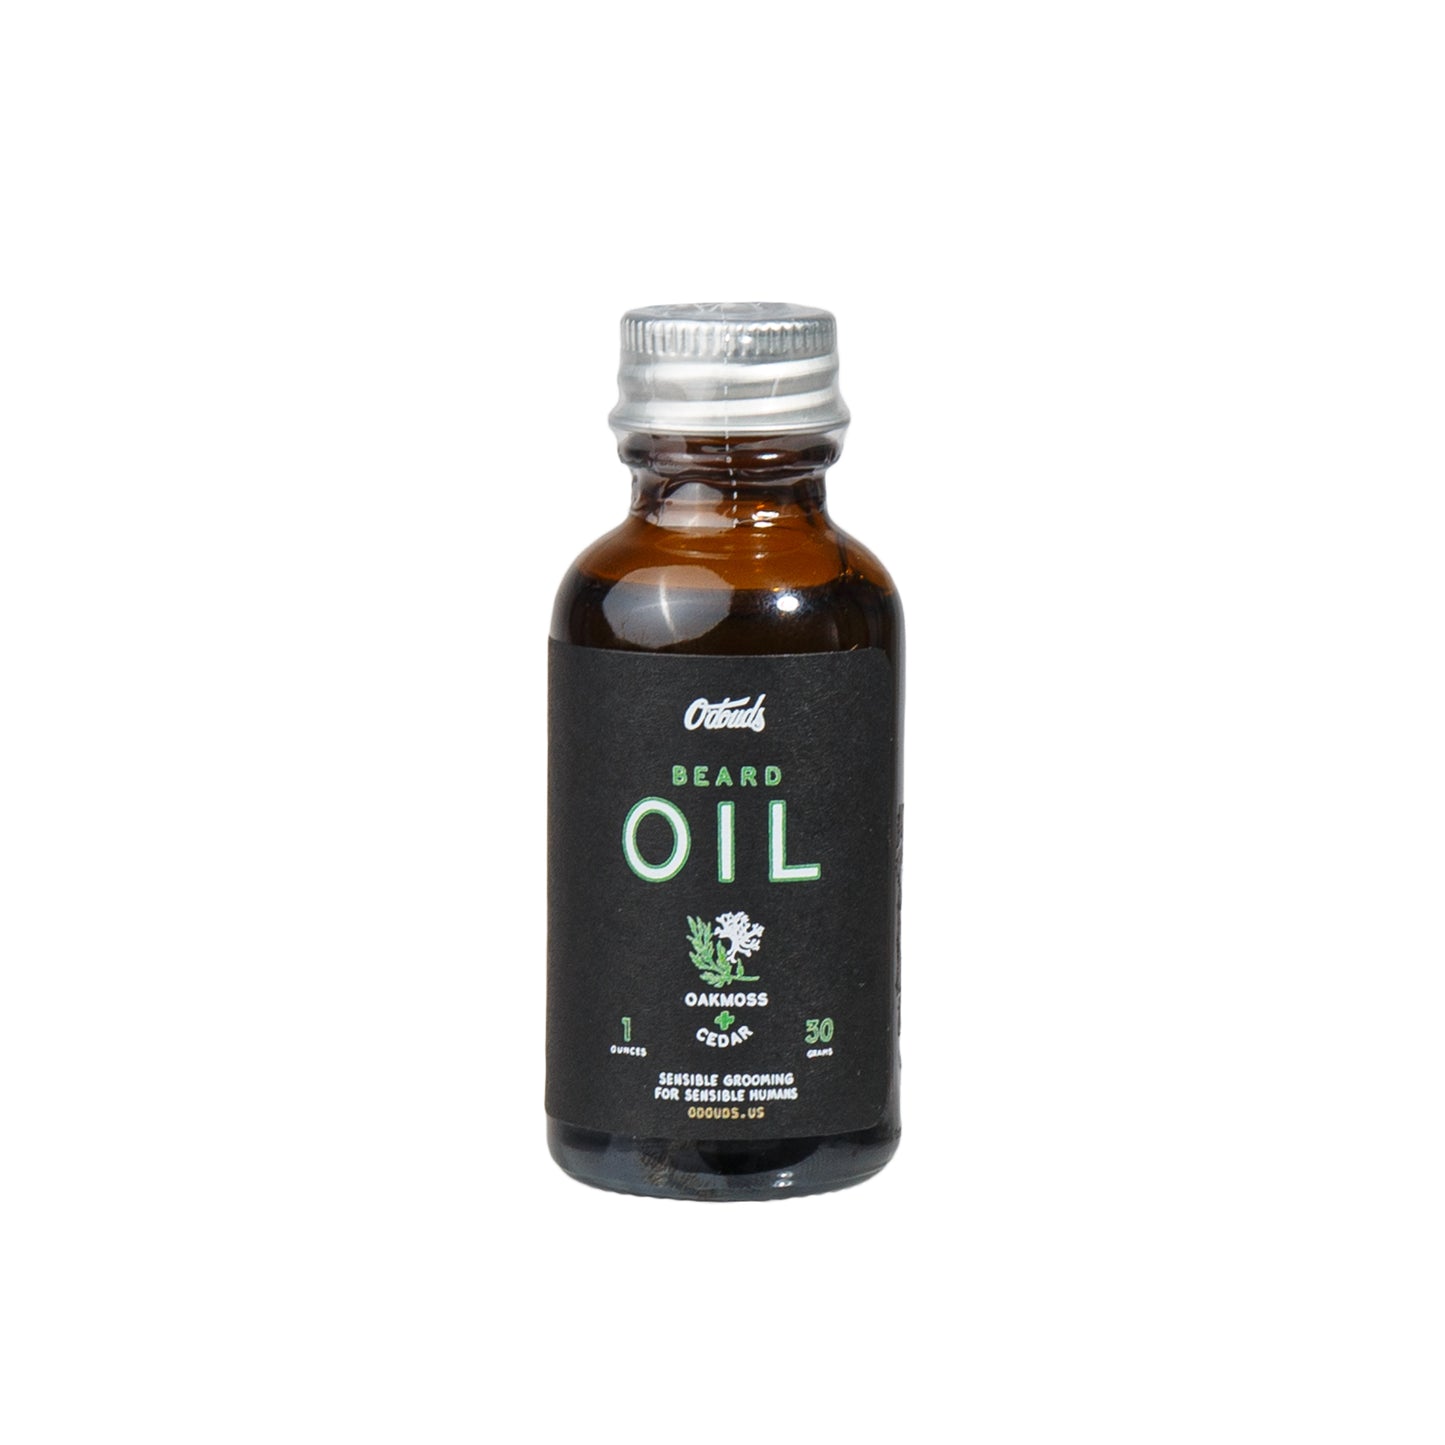 Primary Image of Oakmoss & Cedar Beard Oil